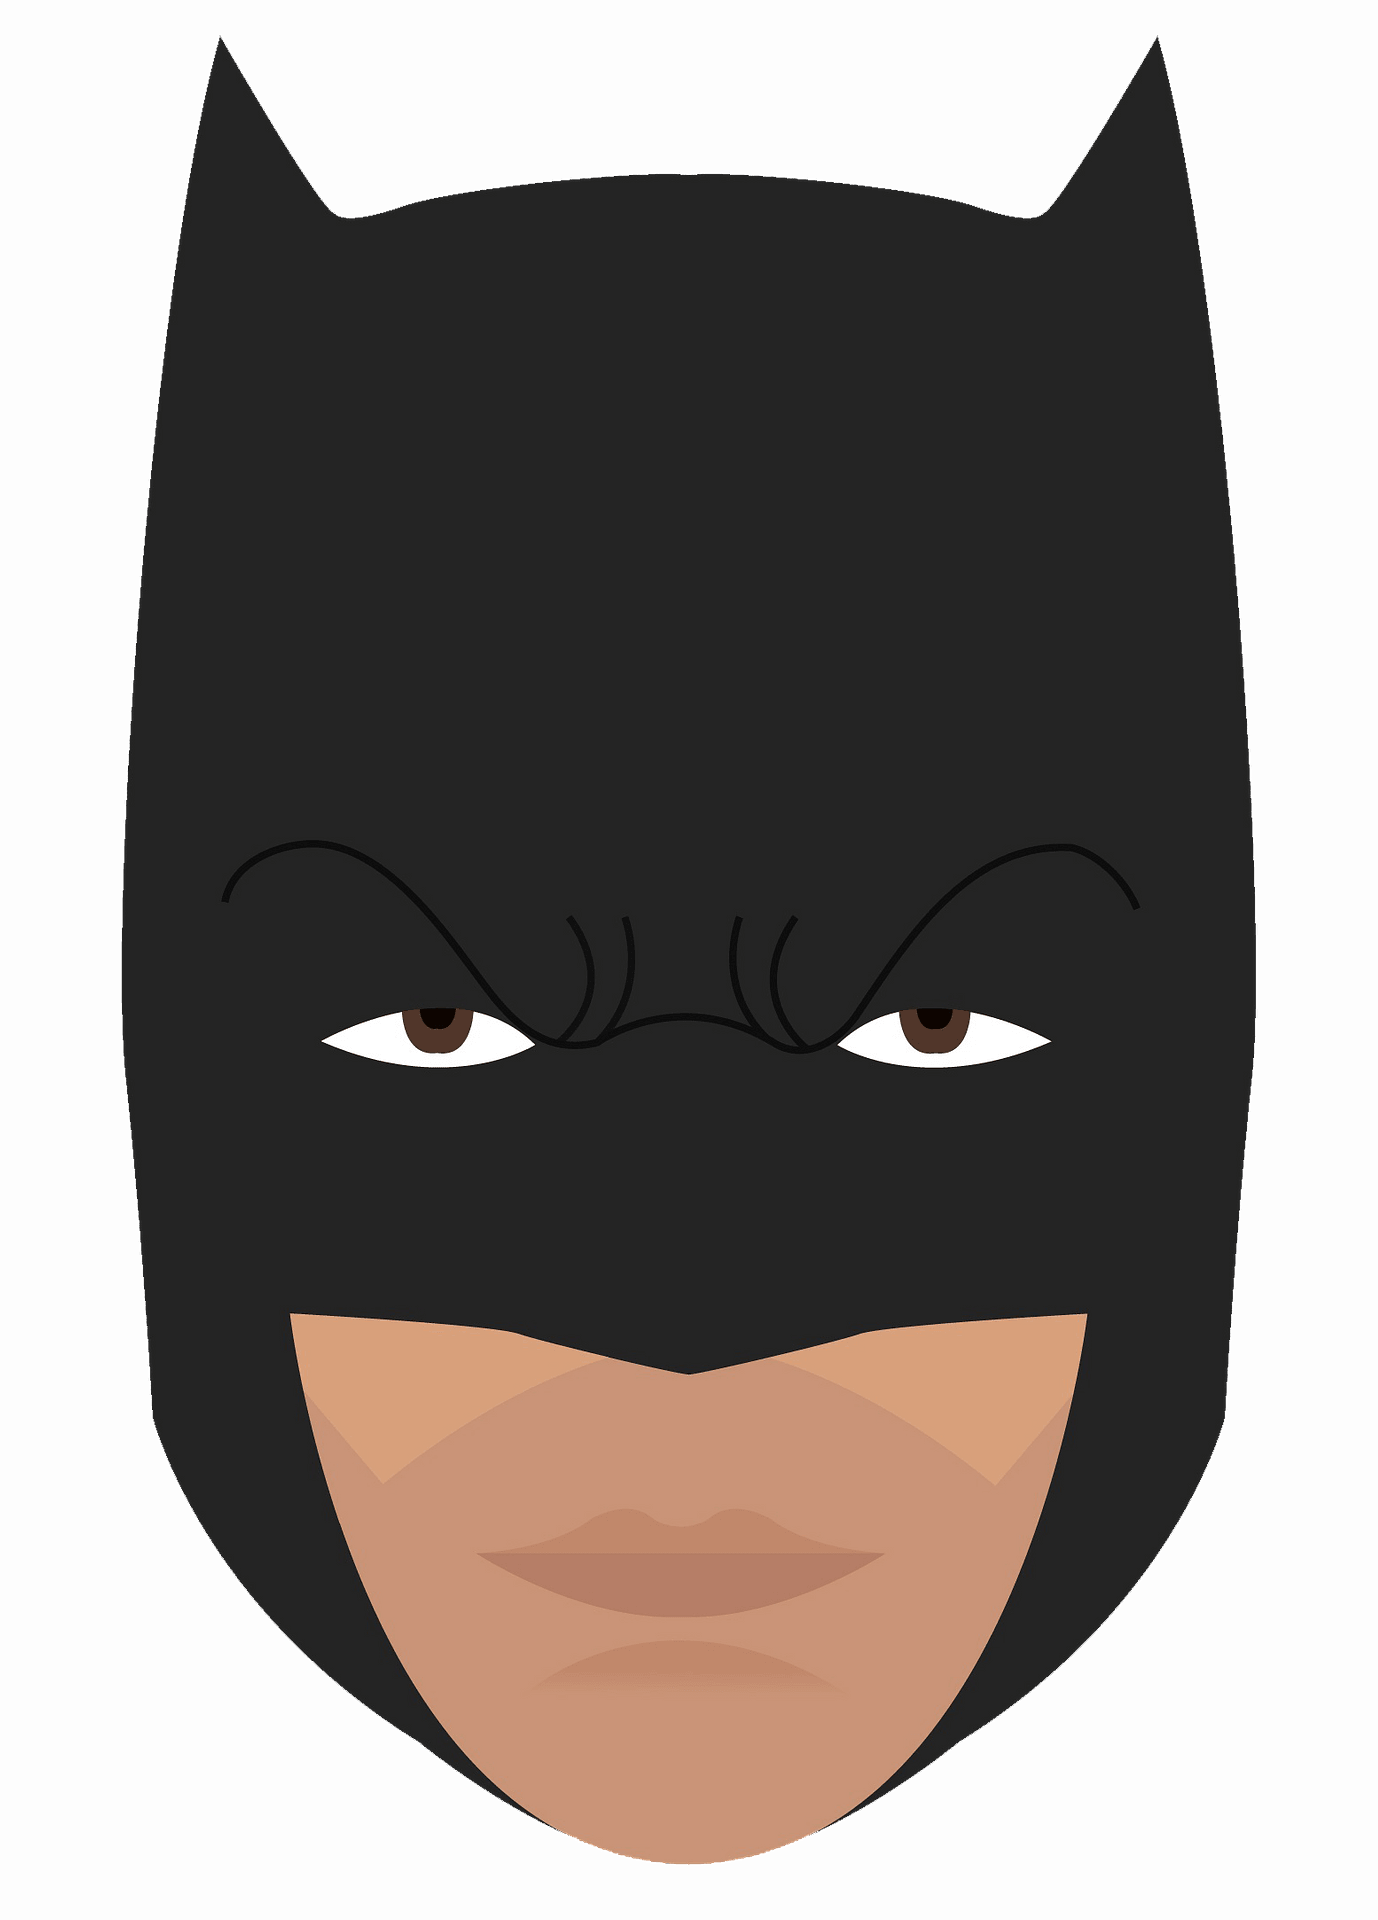 Chibi Batman Face Transparent PNG